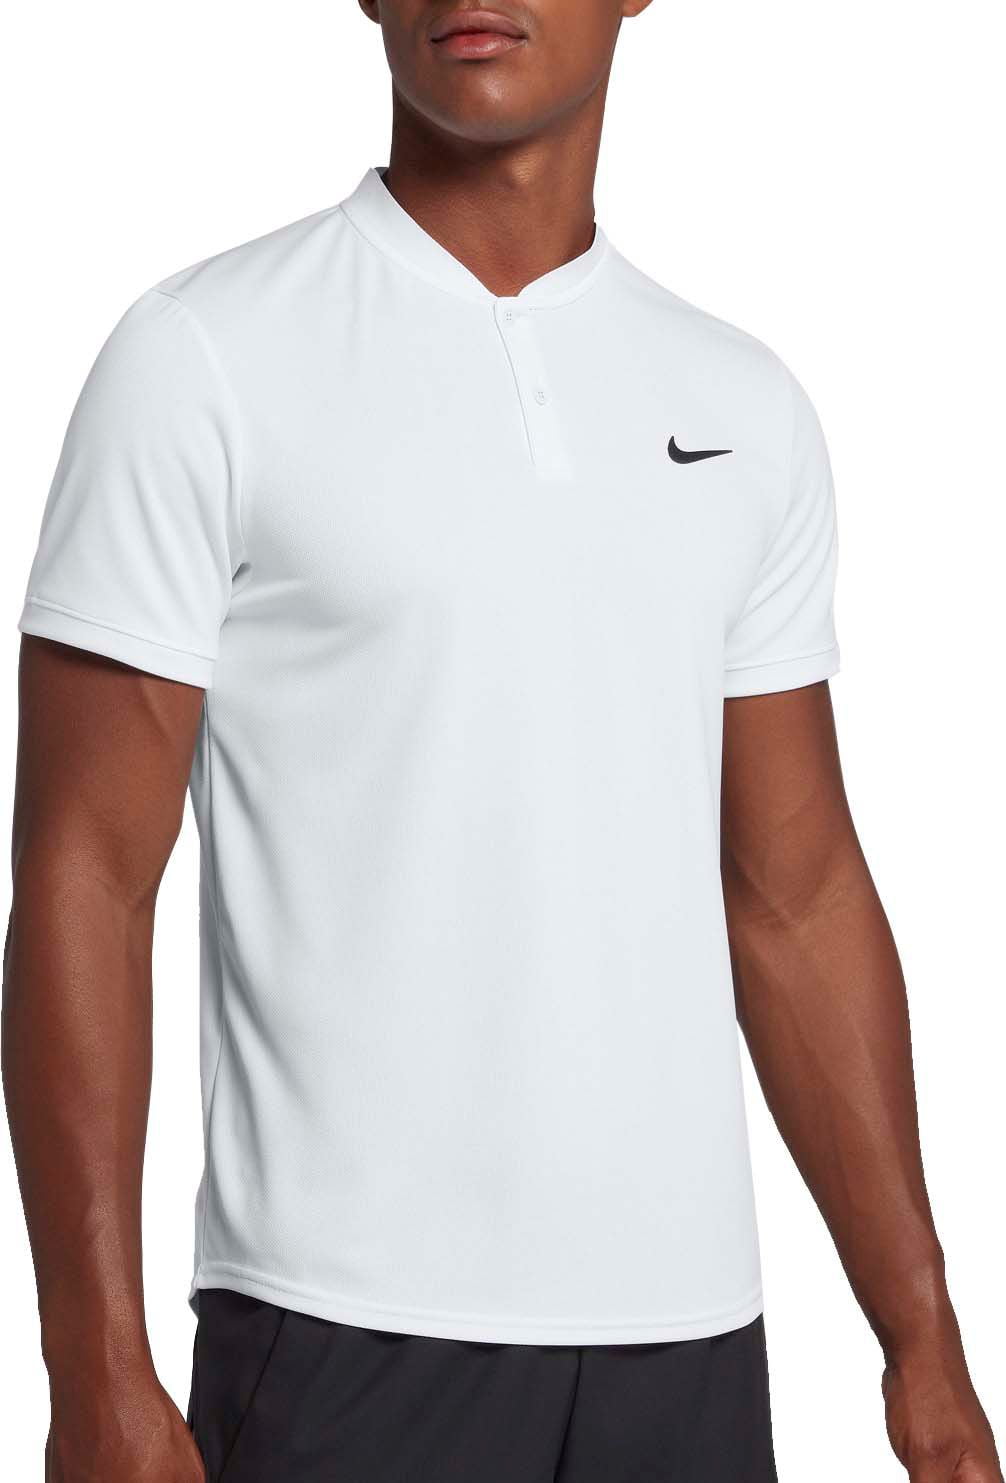 Necesito alcanzar núcleo Nike Men's NikeCourt Dry Blade Tennis Polo, White/Black, M - Walmart.com